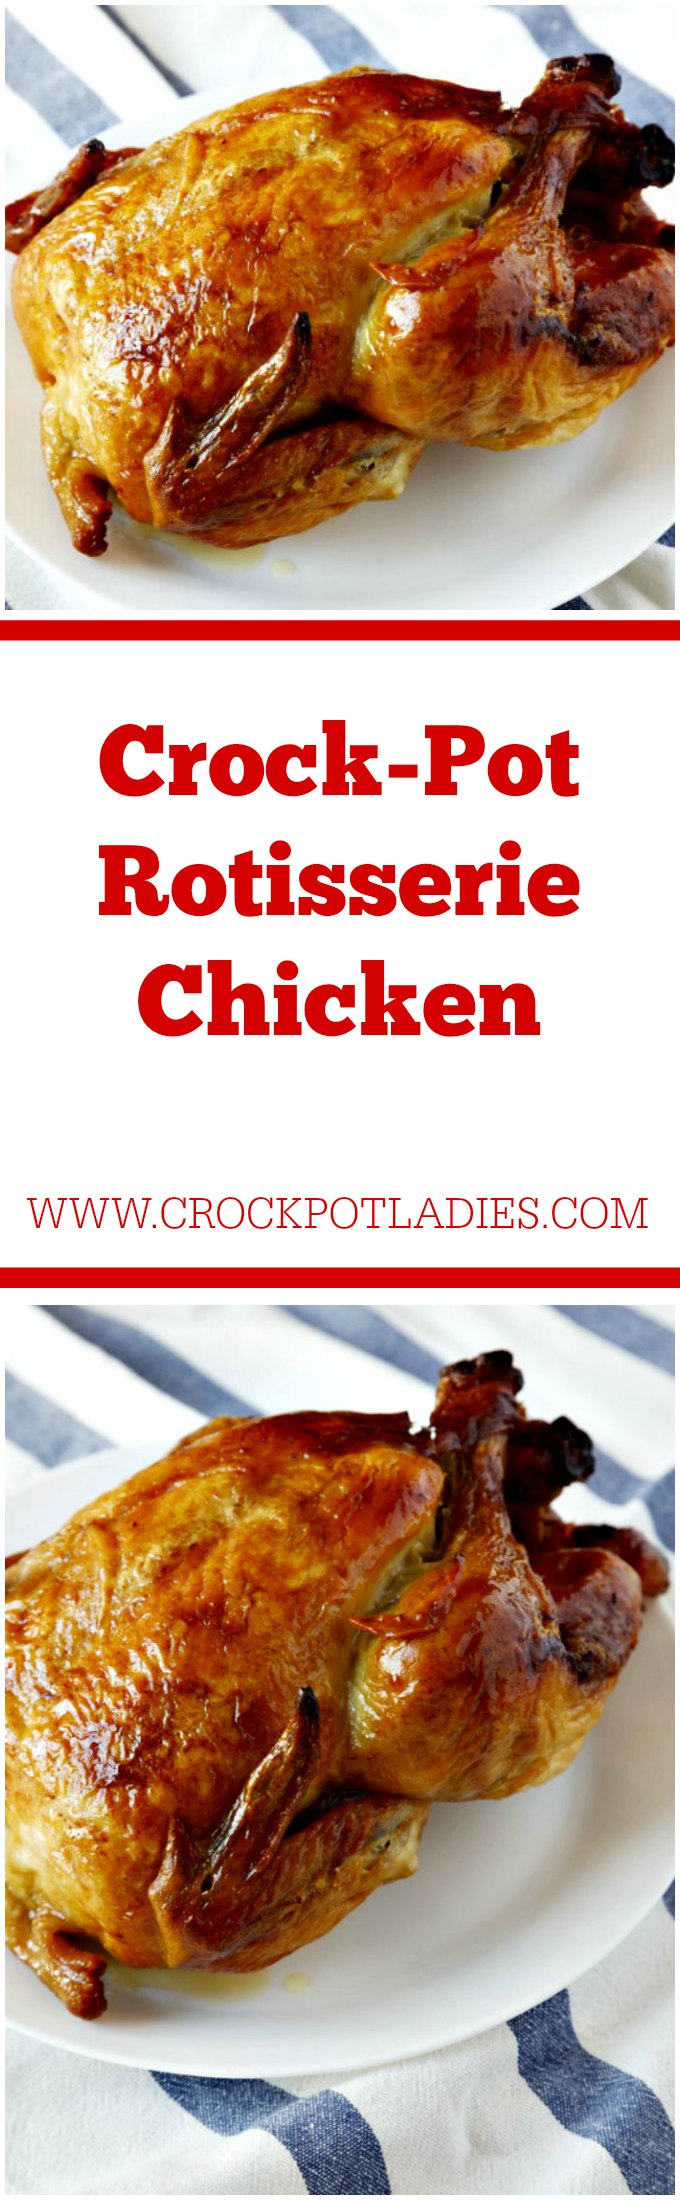 Crock Pot Rotisserie Chicken Crock Pot Ladies,8th Anniversary